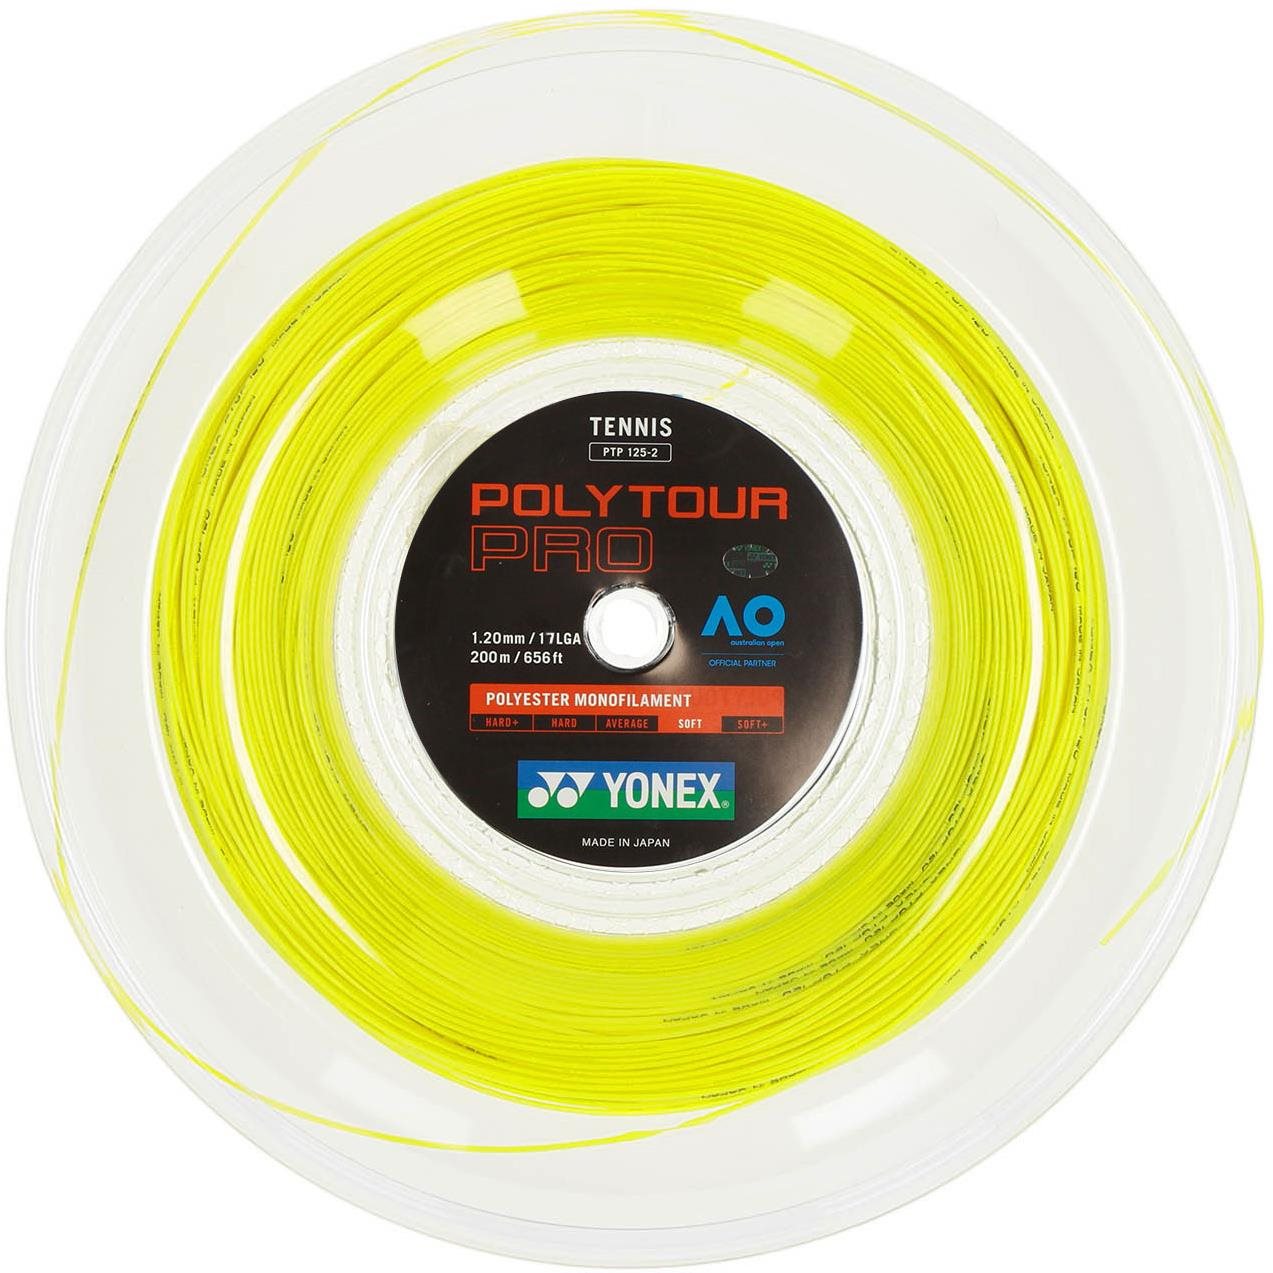 Teniszhúr Yonex Poly Tour PRO 120, 1,20mm, 200m, sárga